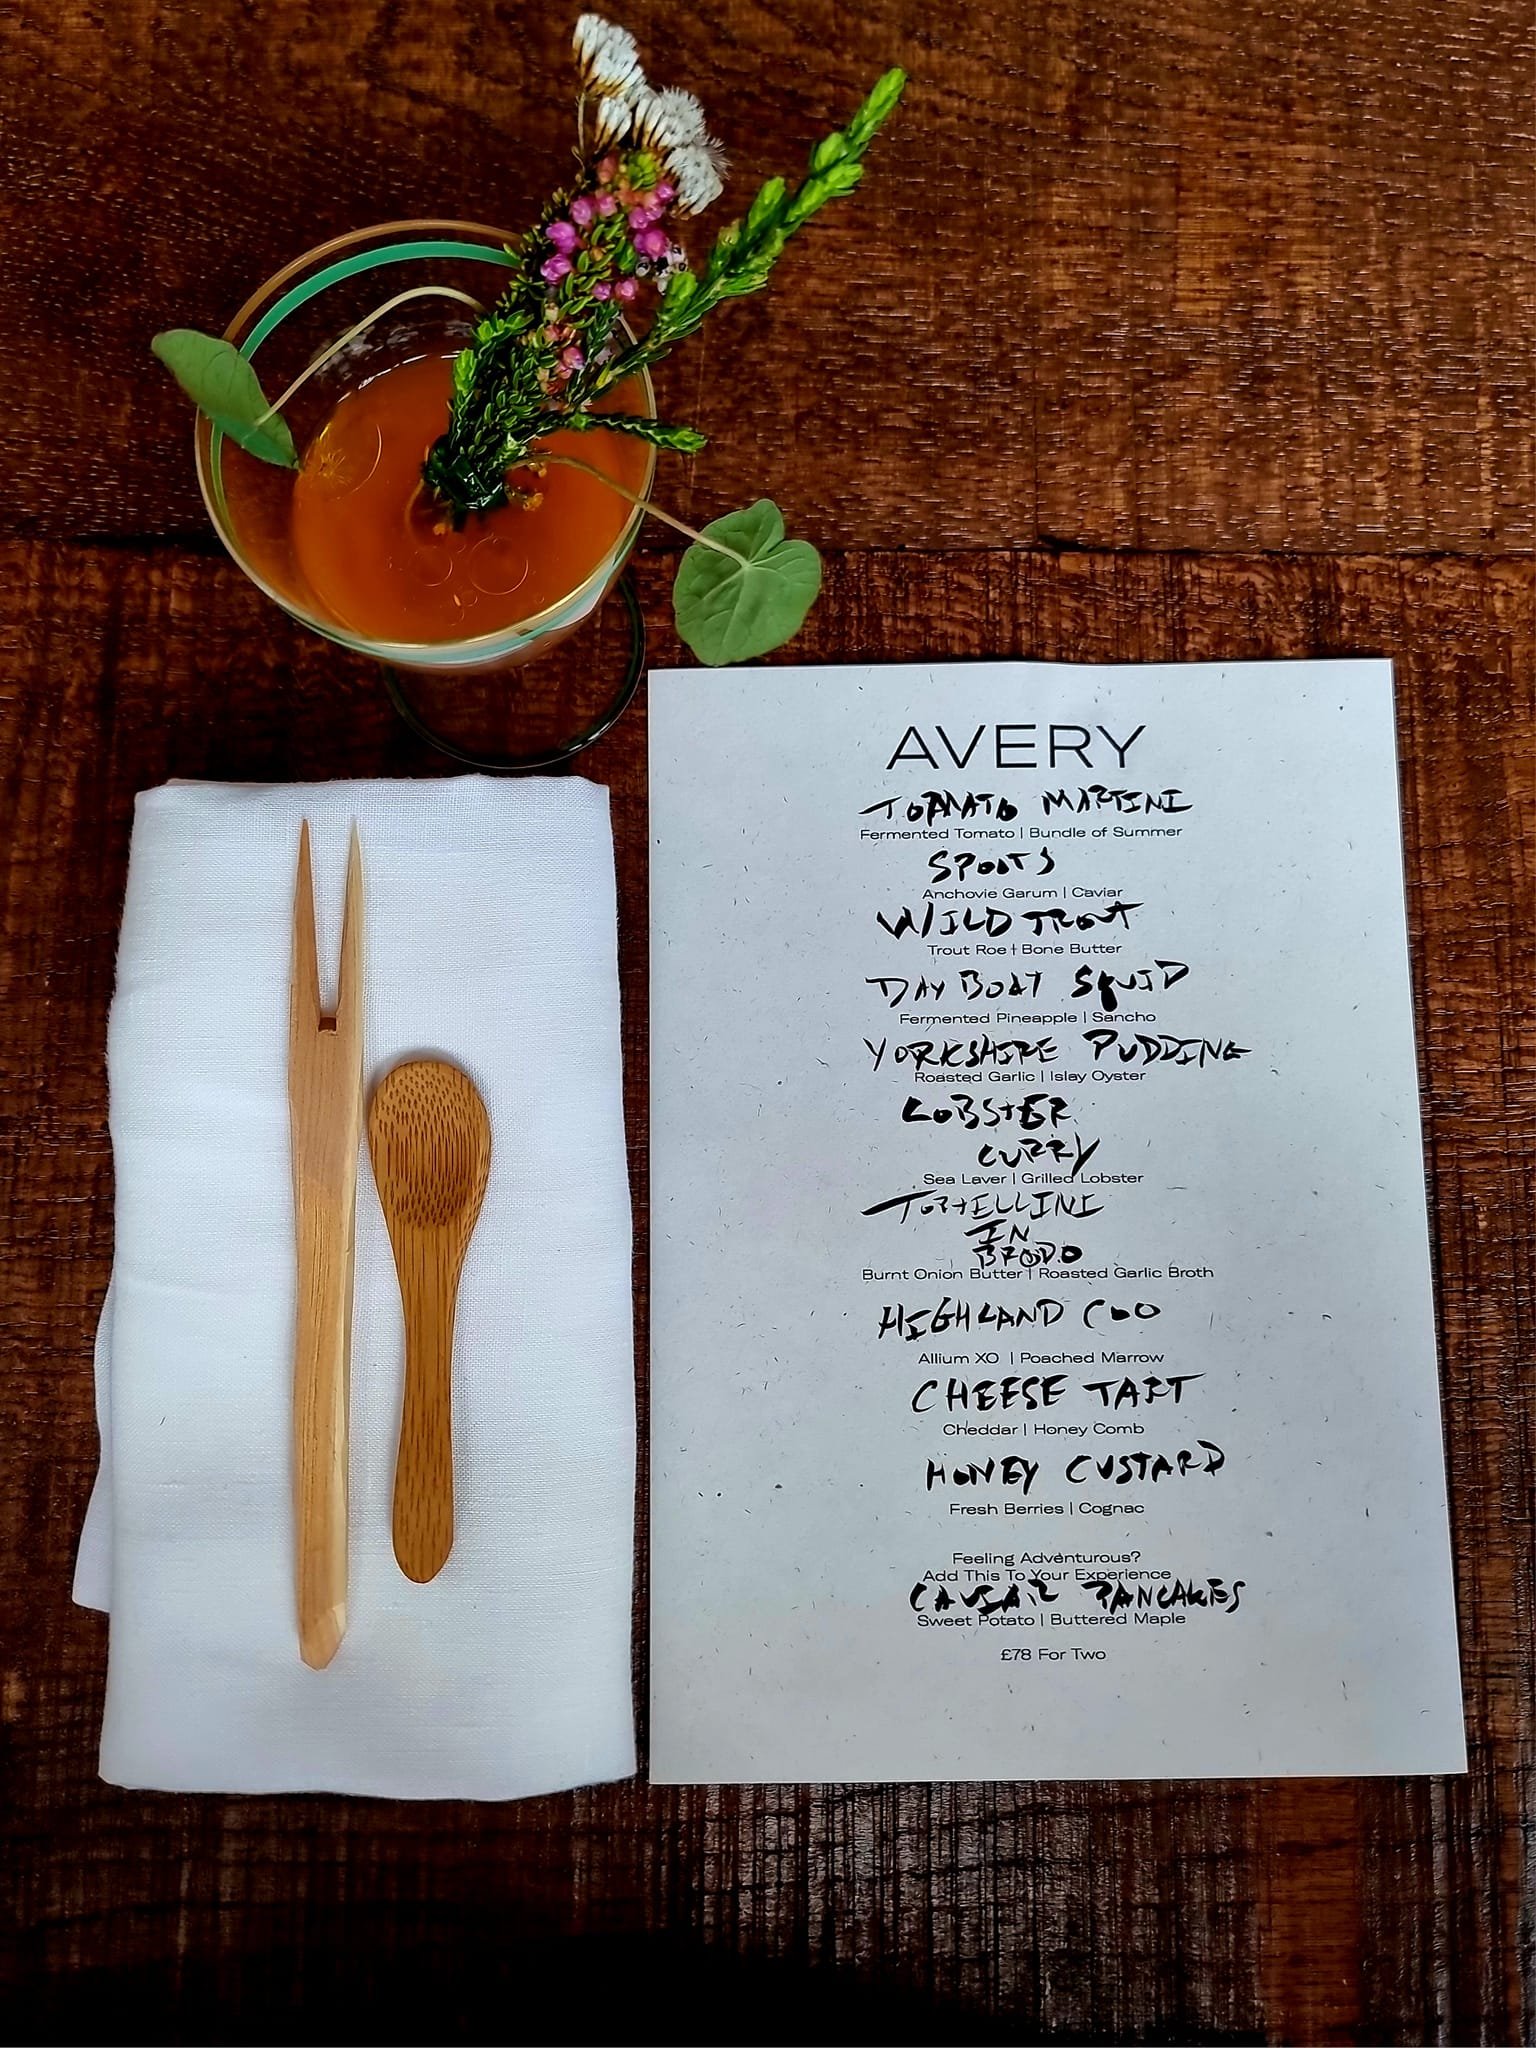 avery menu.jpg